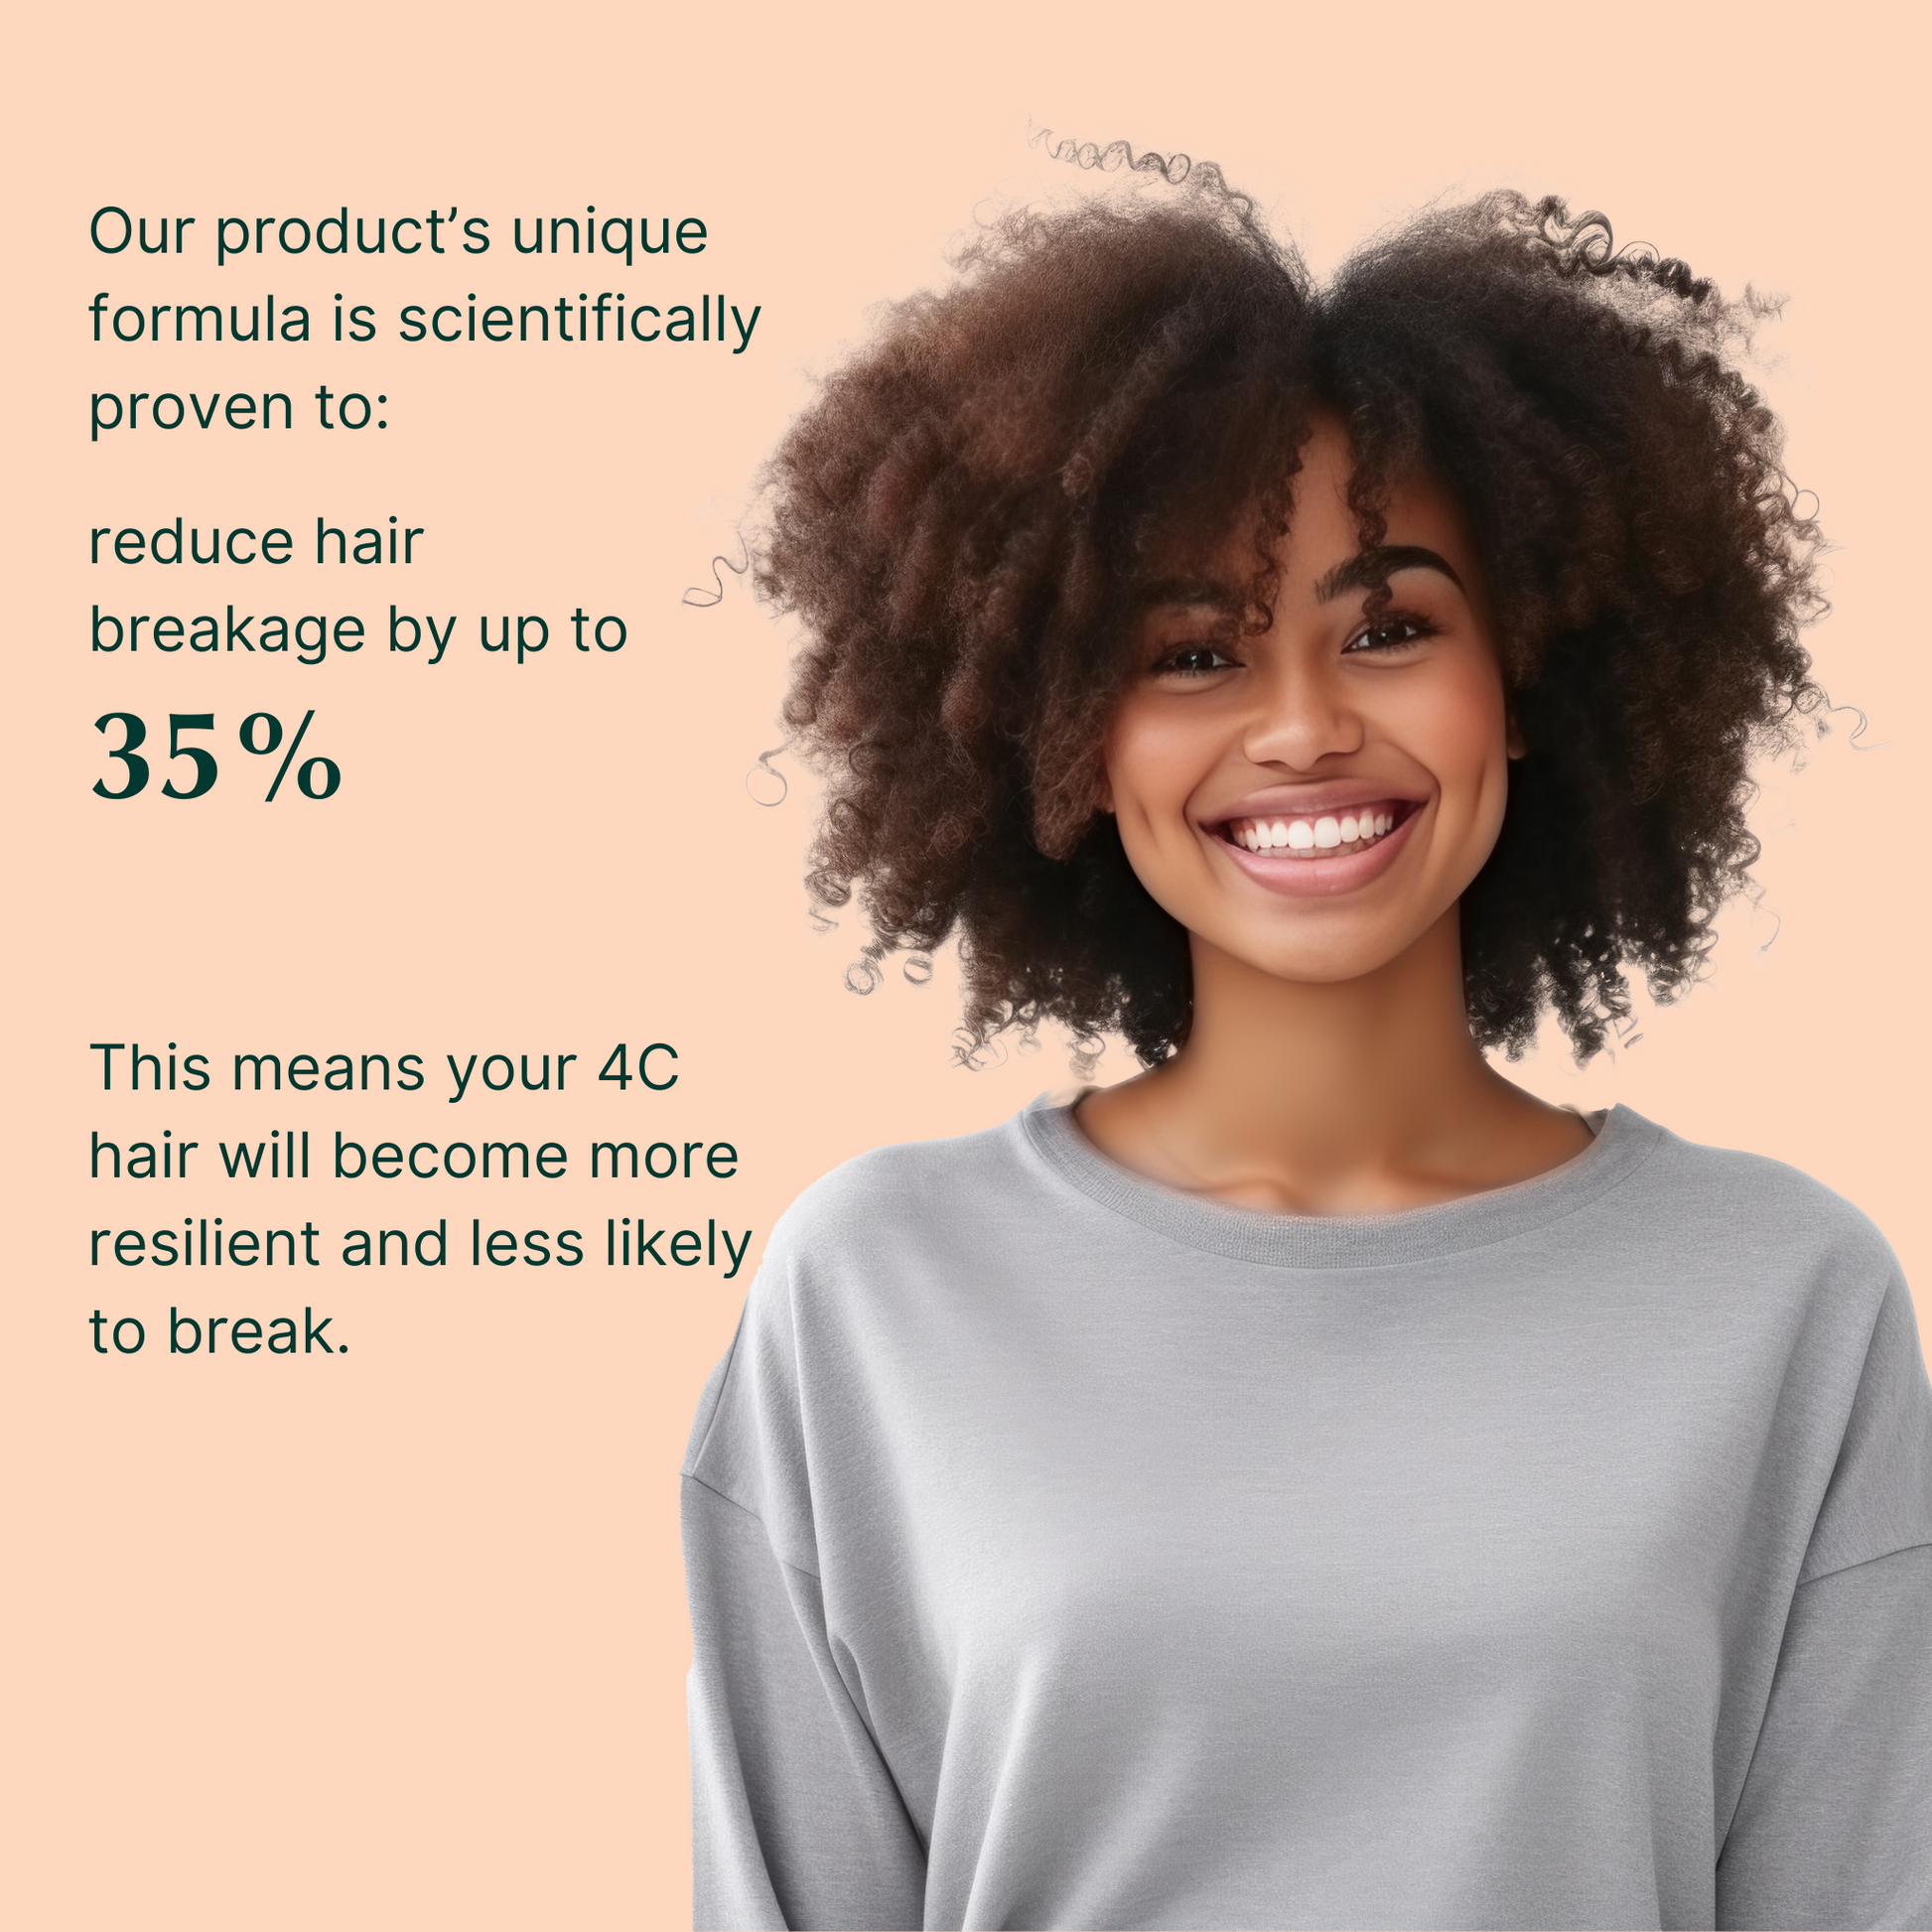 hair breakage science backed statistics